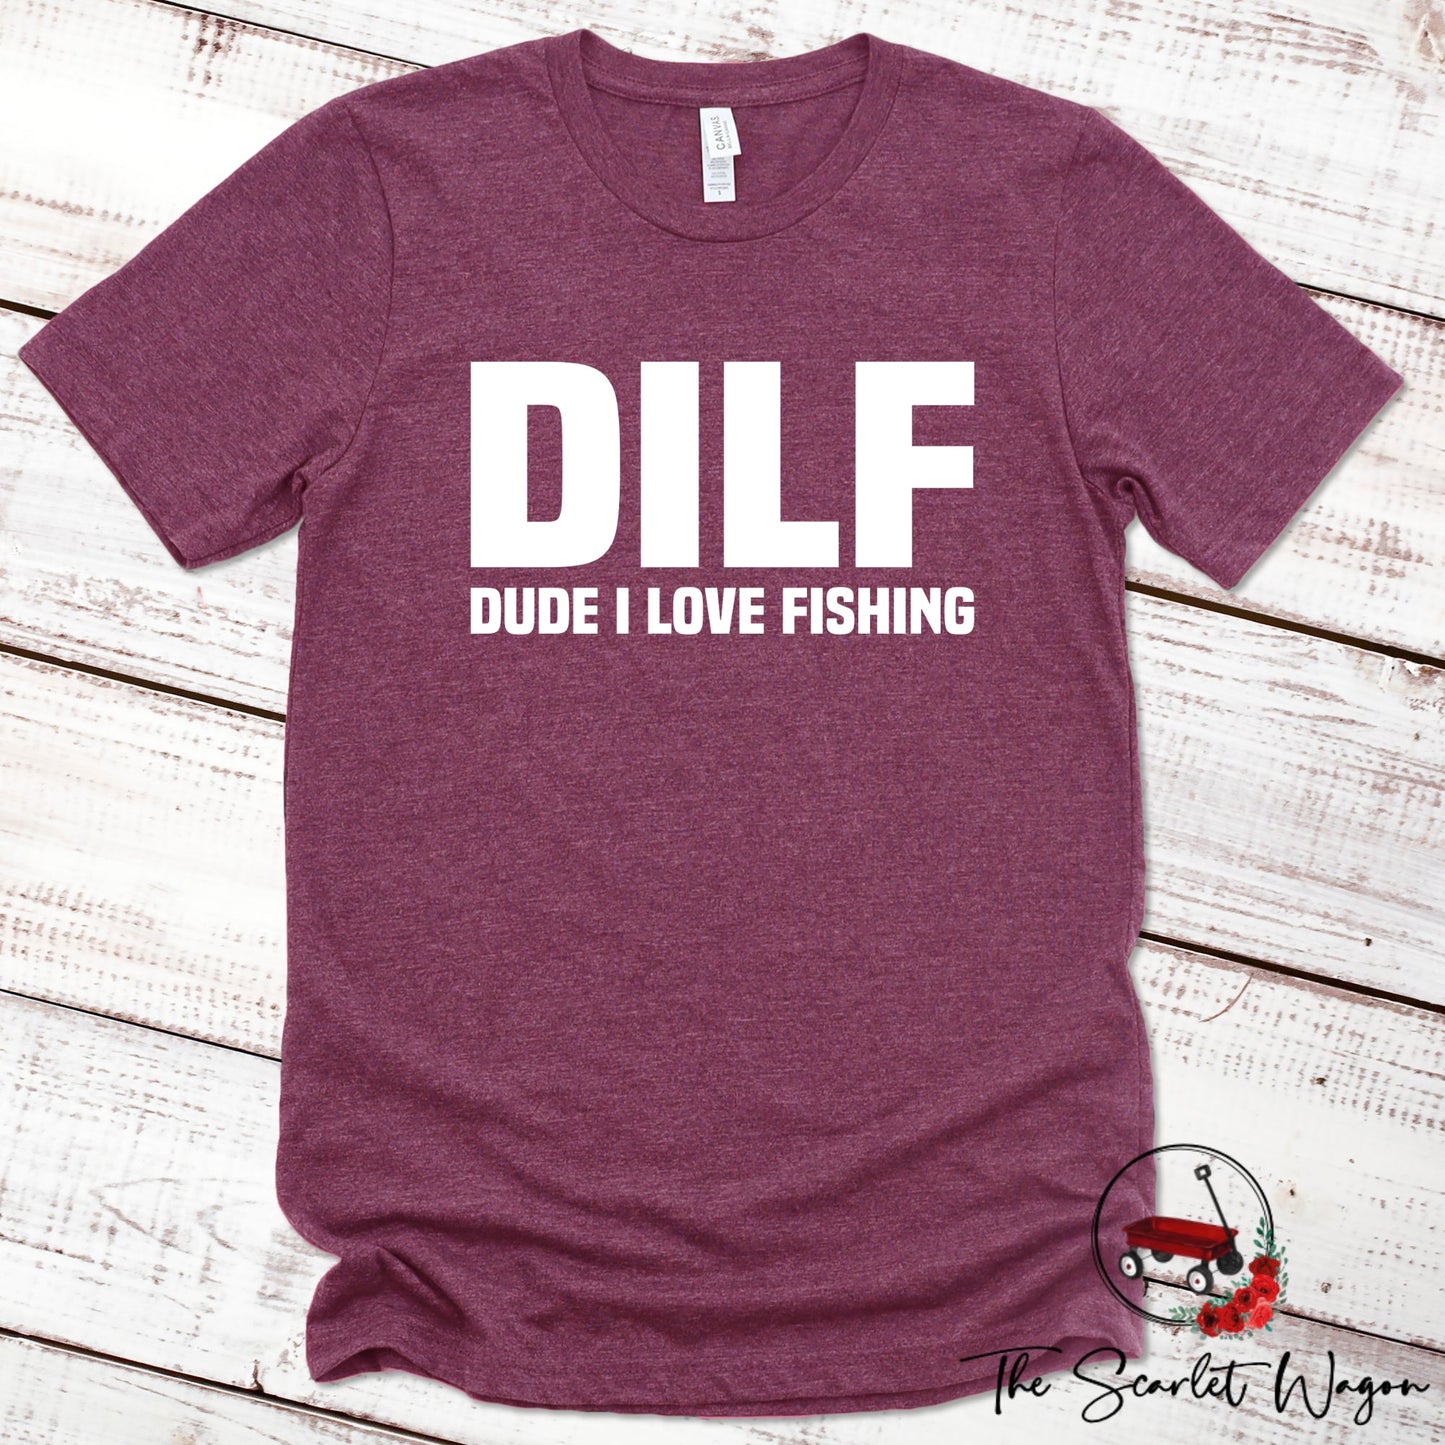 DILF - Dude I Love Fishing Premium Tee Scarlet Wagon Heather Maroon XS 